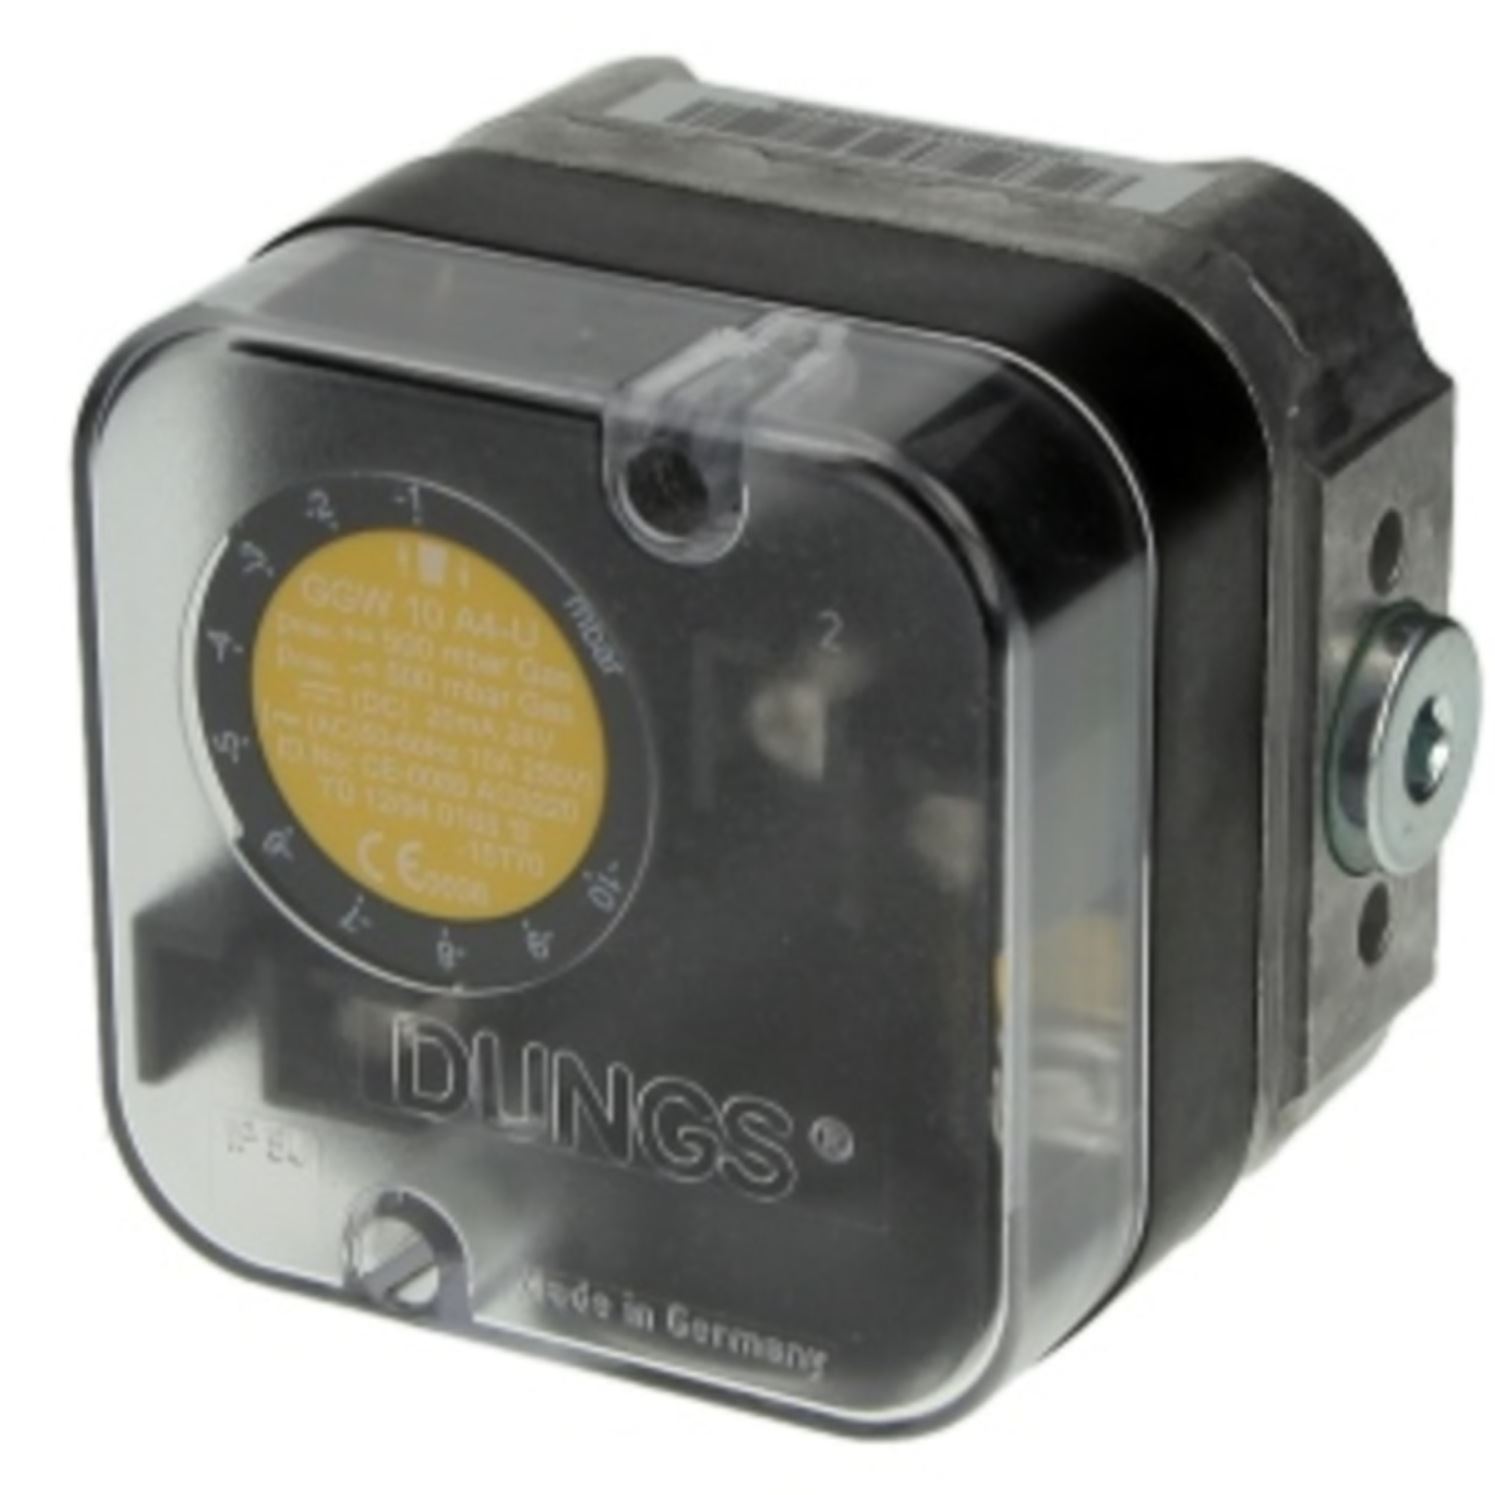 Dungs Differenzdruckwächter GGW 10 A4U - 240358